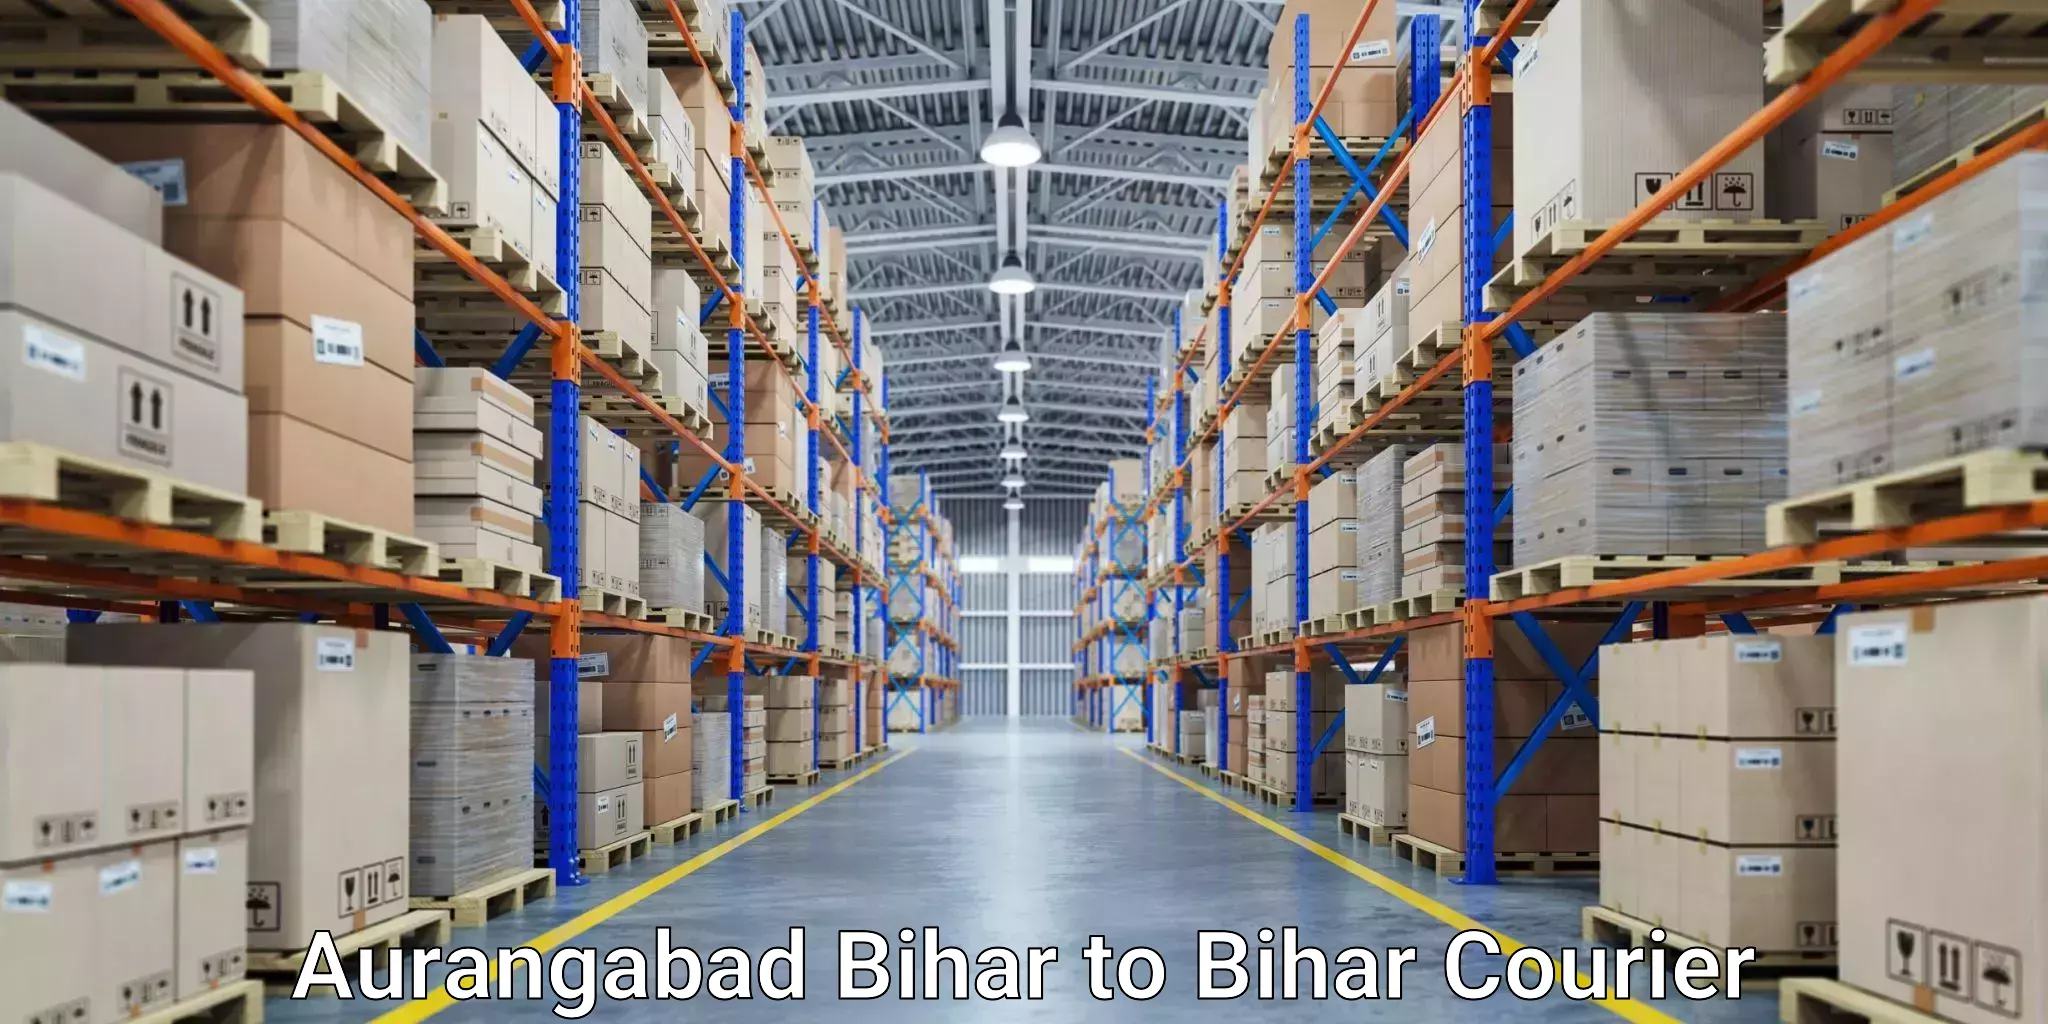 Speedy delivery service Aurangabad Bihar to Mahaddipur